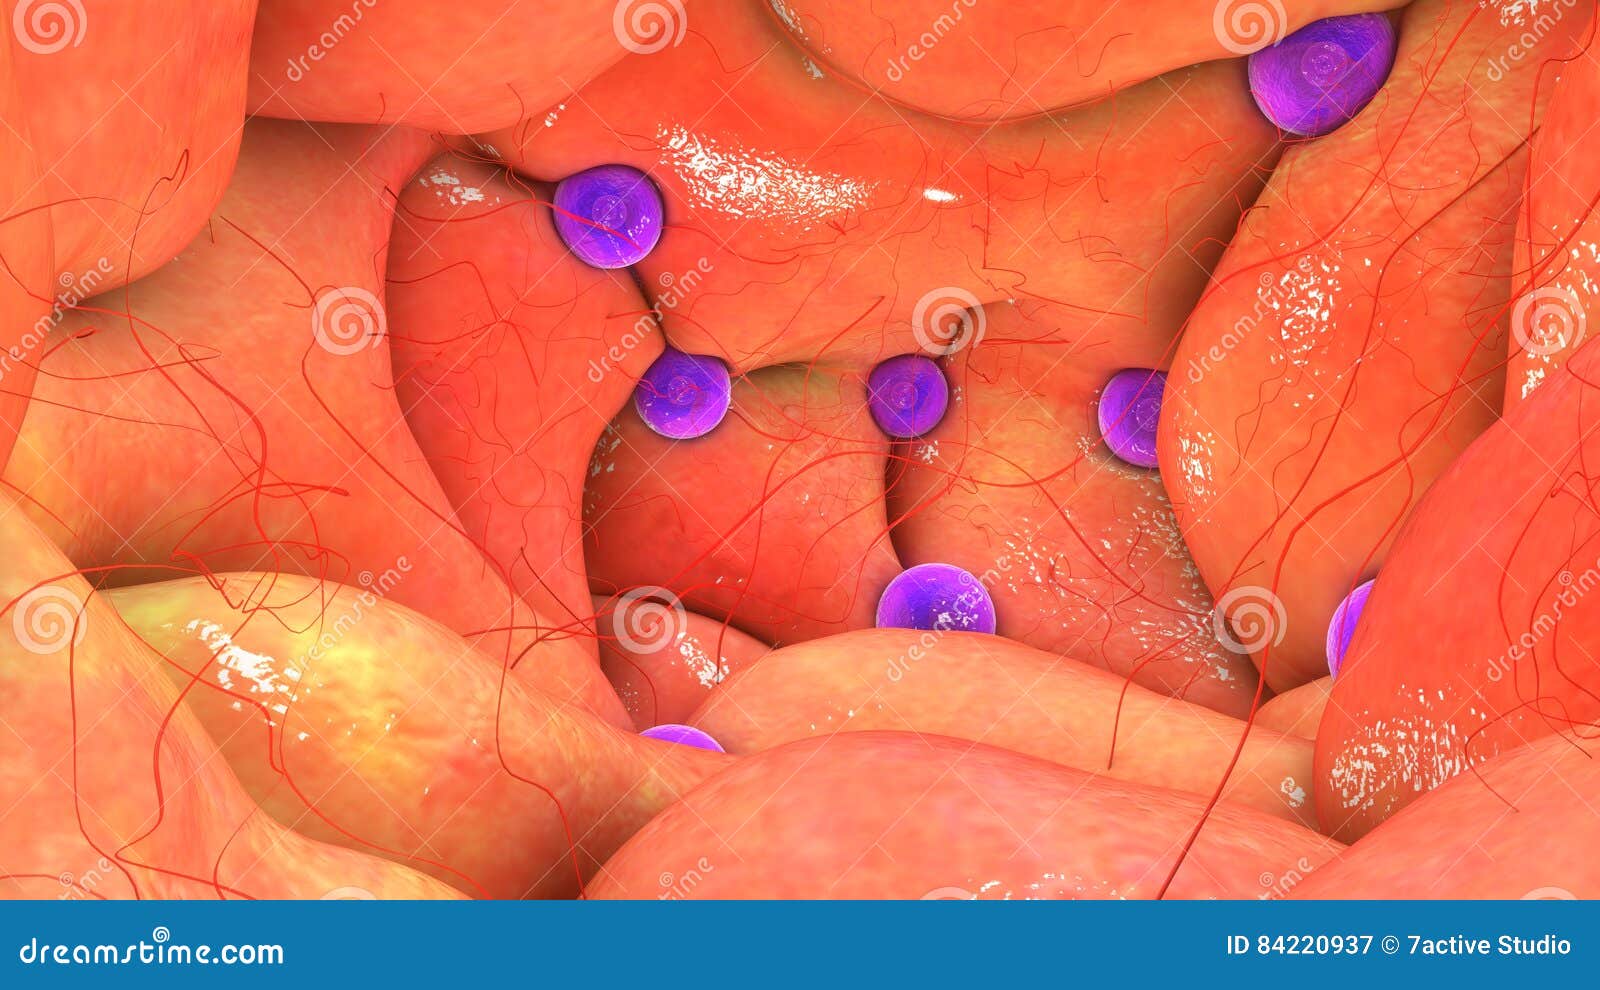 Ovary Anatomy stock image. Image of physiology, reproduction - 84220937